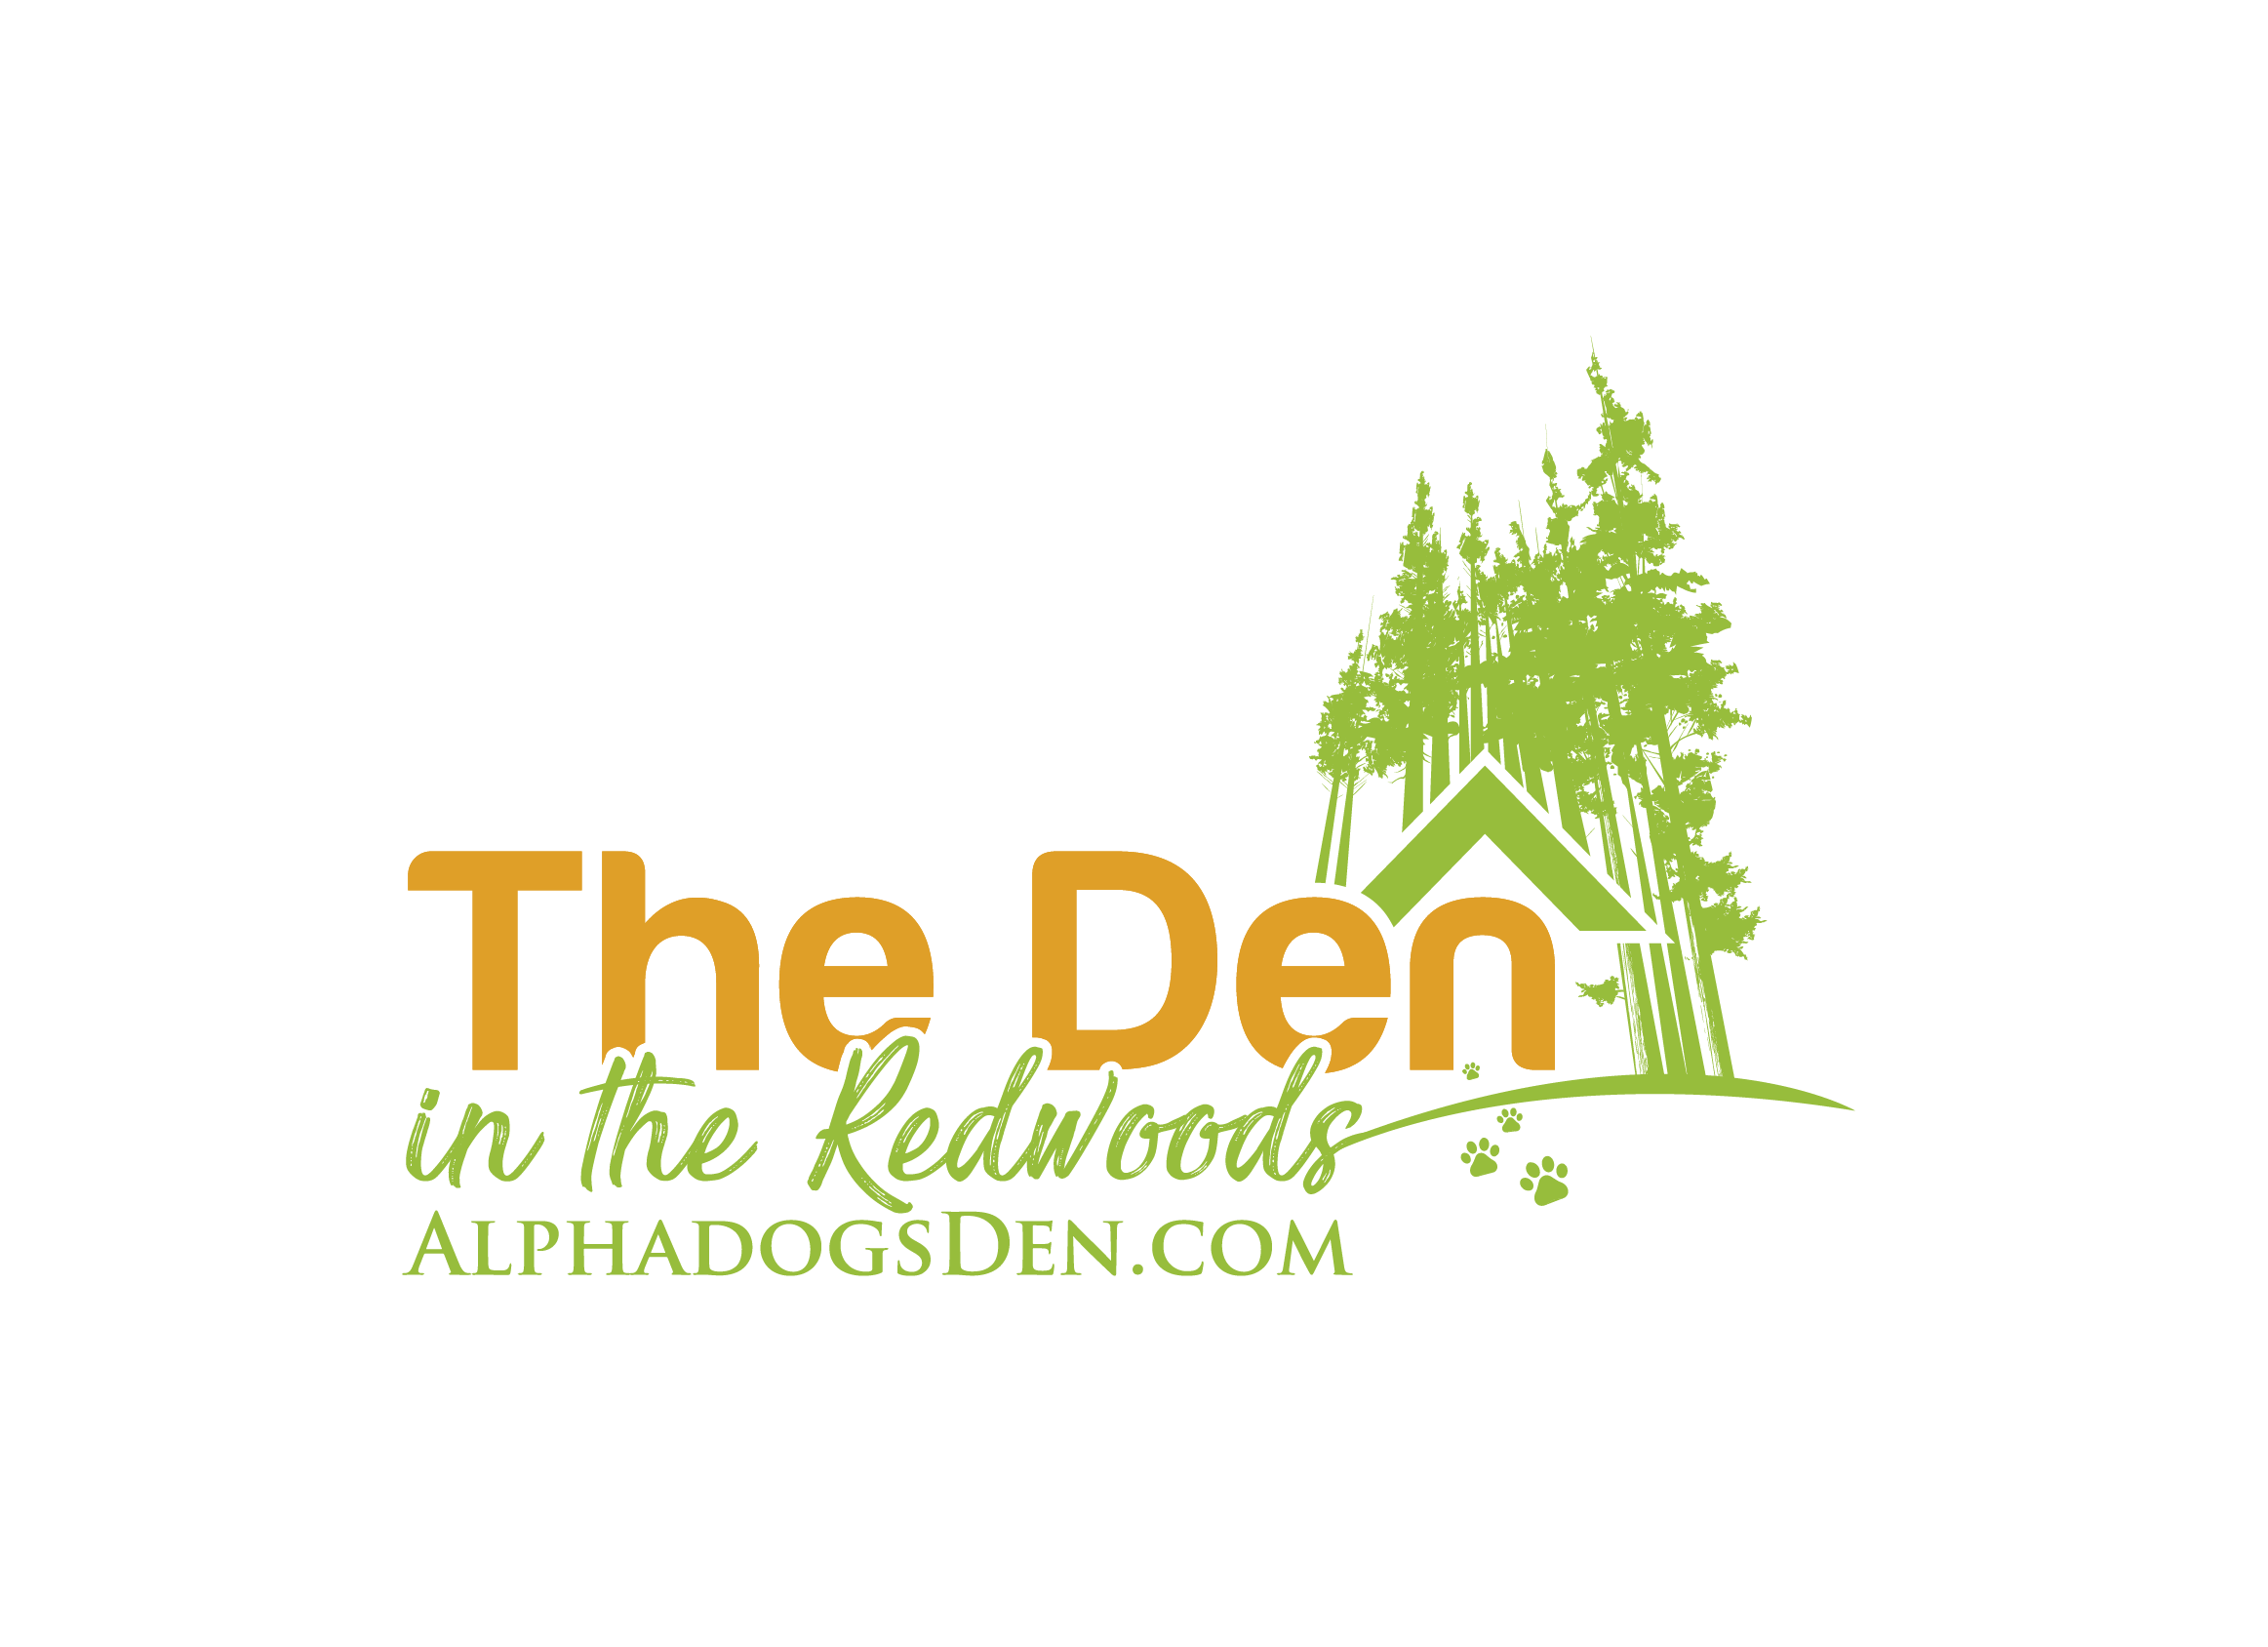 The Den in the Redwoods